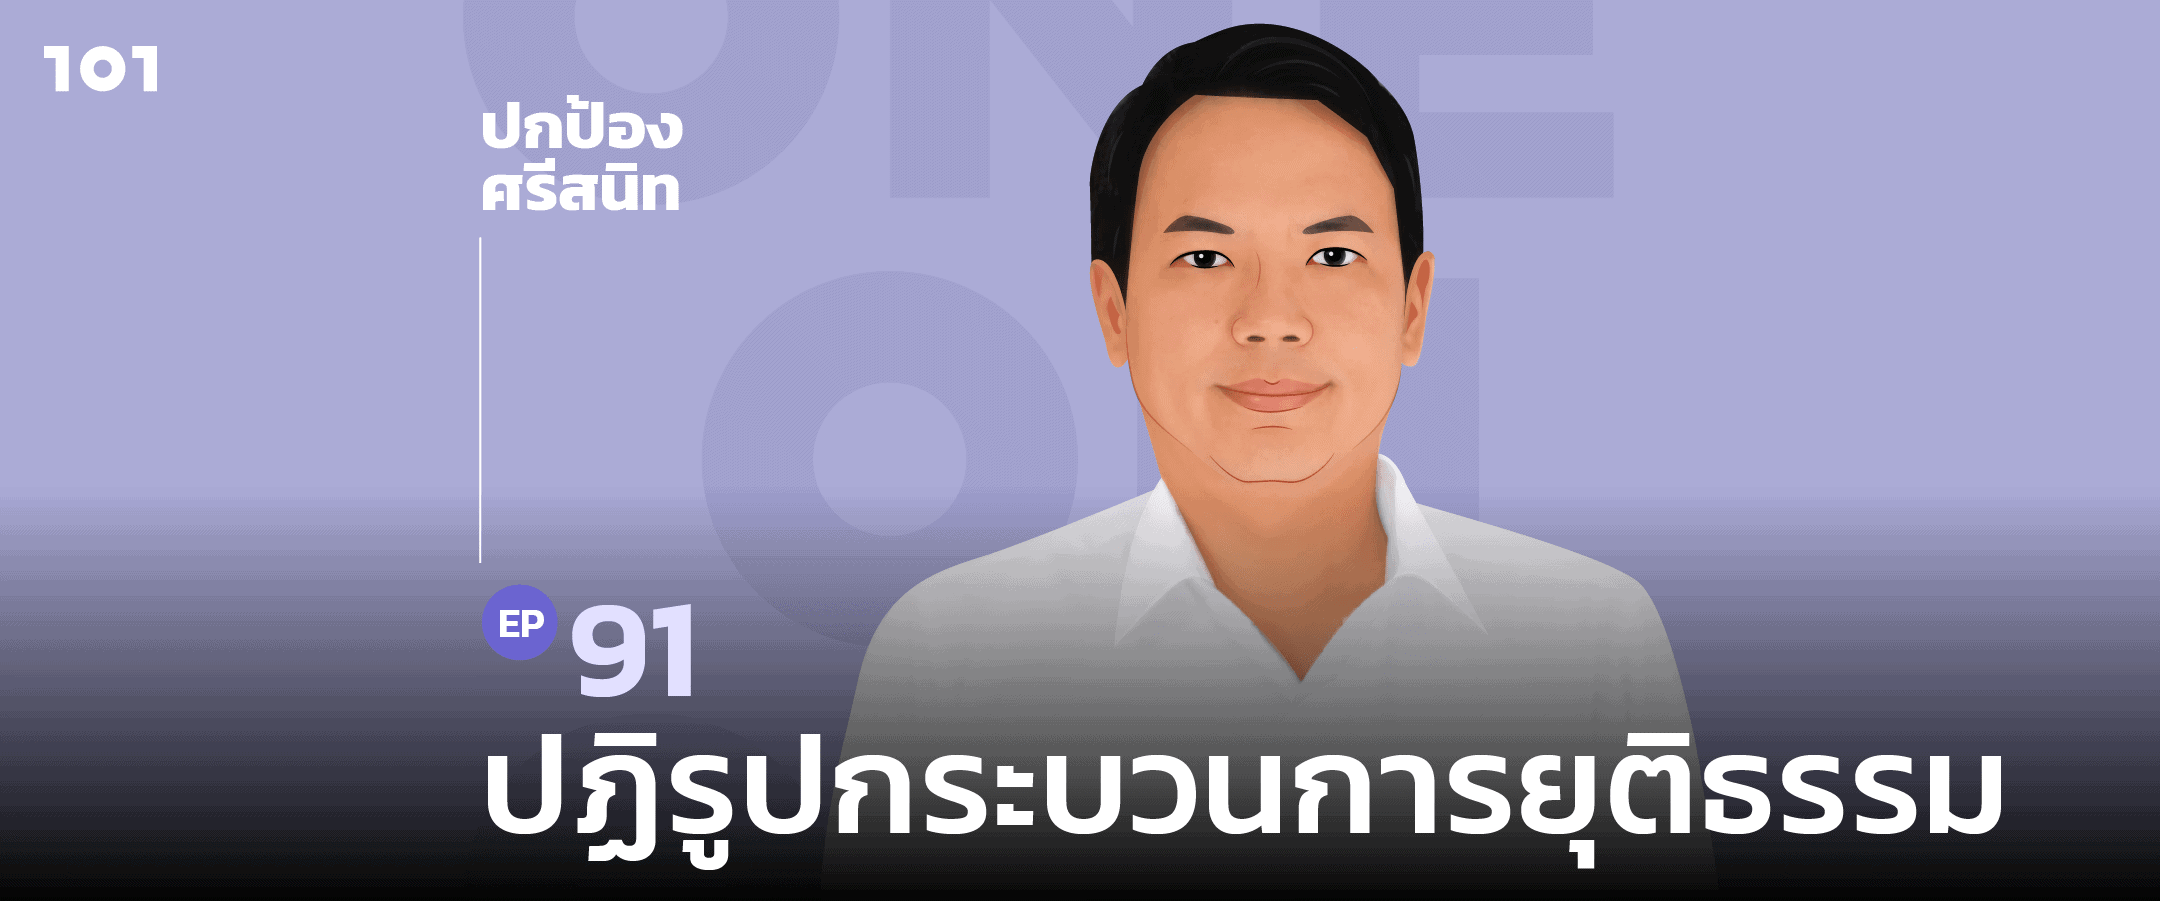 101 One-on-One Ep.91 "ปฏิรูปกระบวนการยุติธรรมไทย" กับ ปกป้อง ศรีสนิท